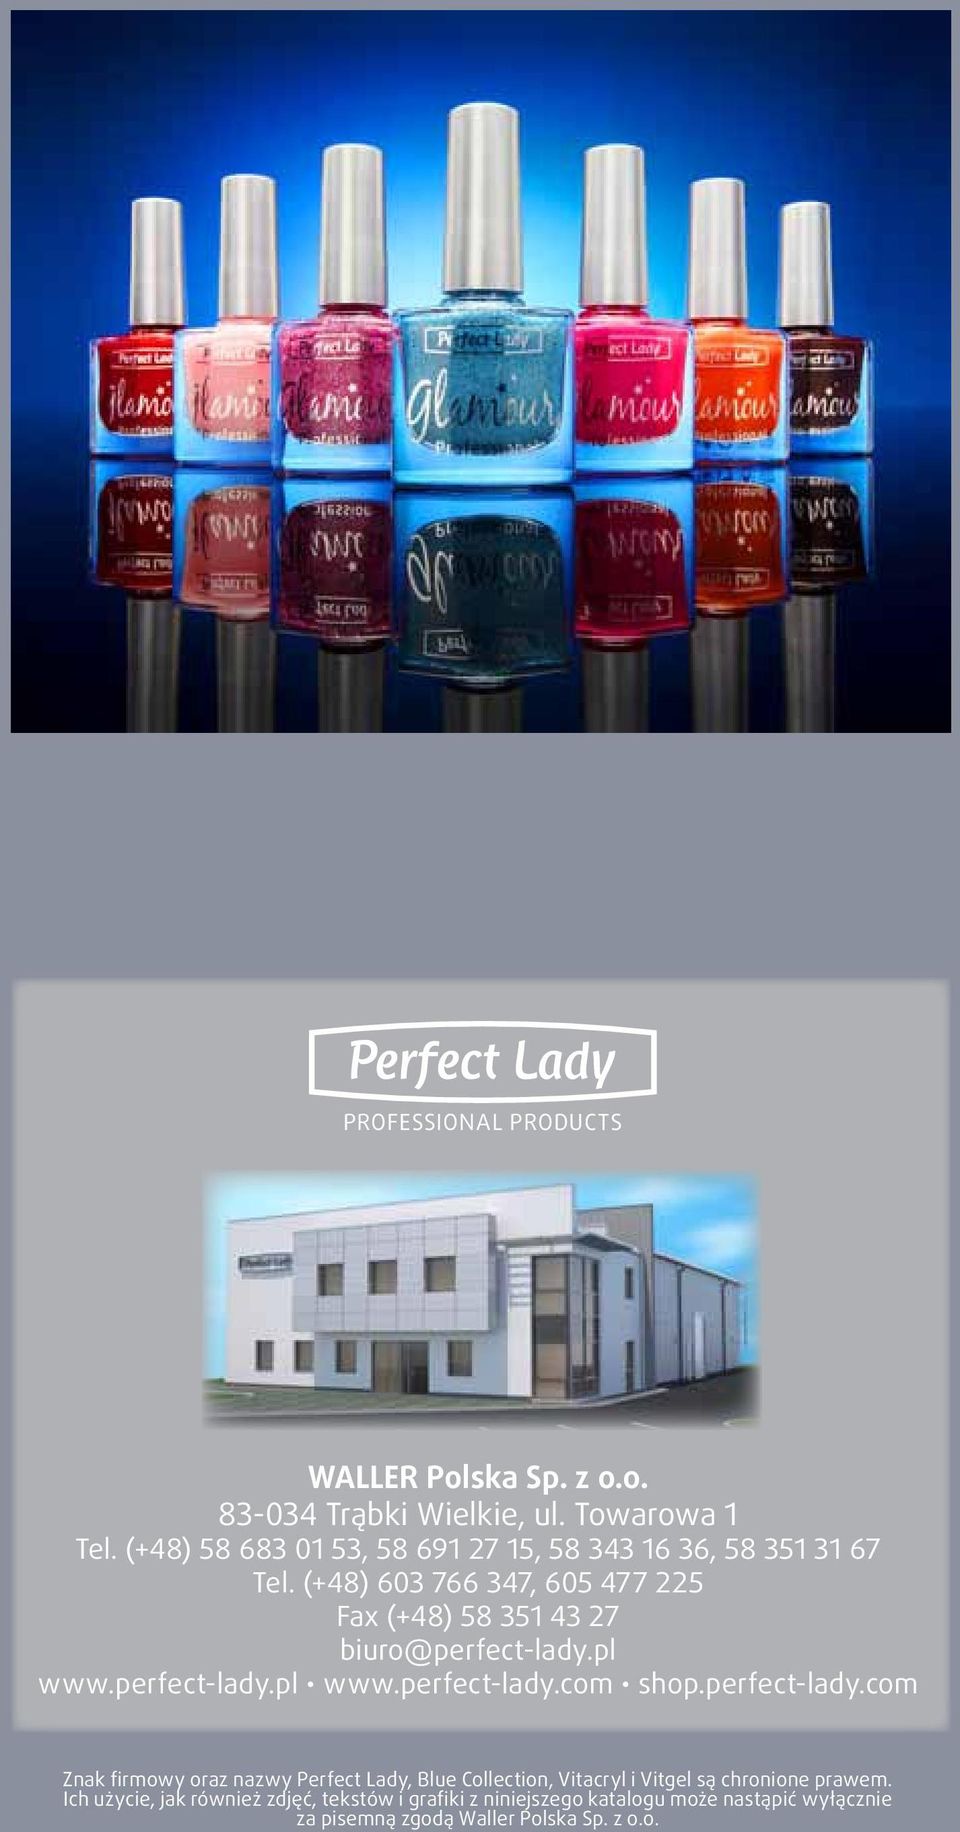 (+48) 603 766 347, 605 477 225 Fax (+48) 58 351 43 27 biuro@perfect-lady.pl www.perfect-lady.pl www.perfect-lady.com shop.